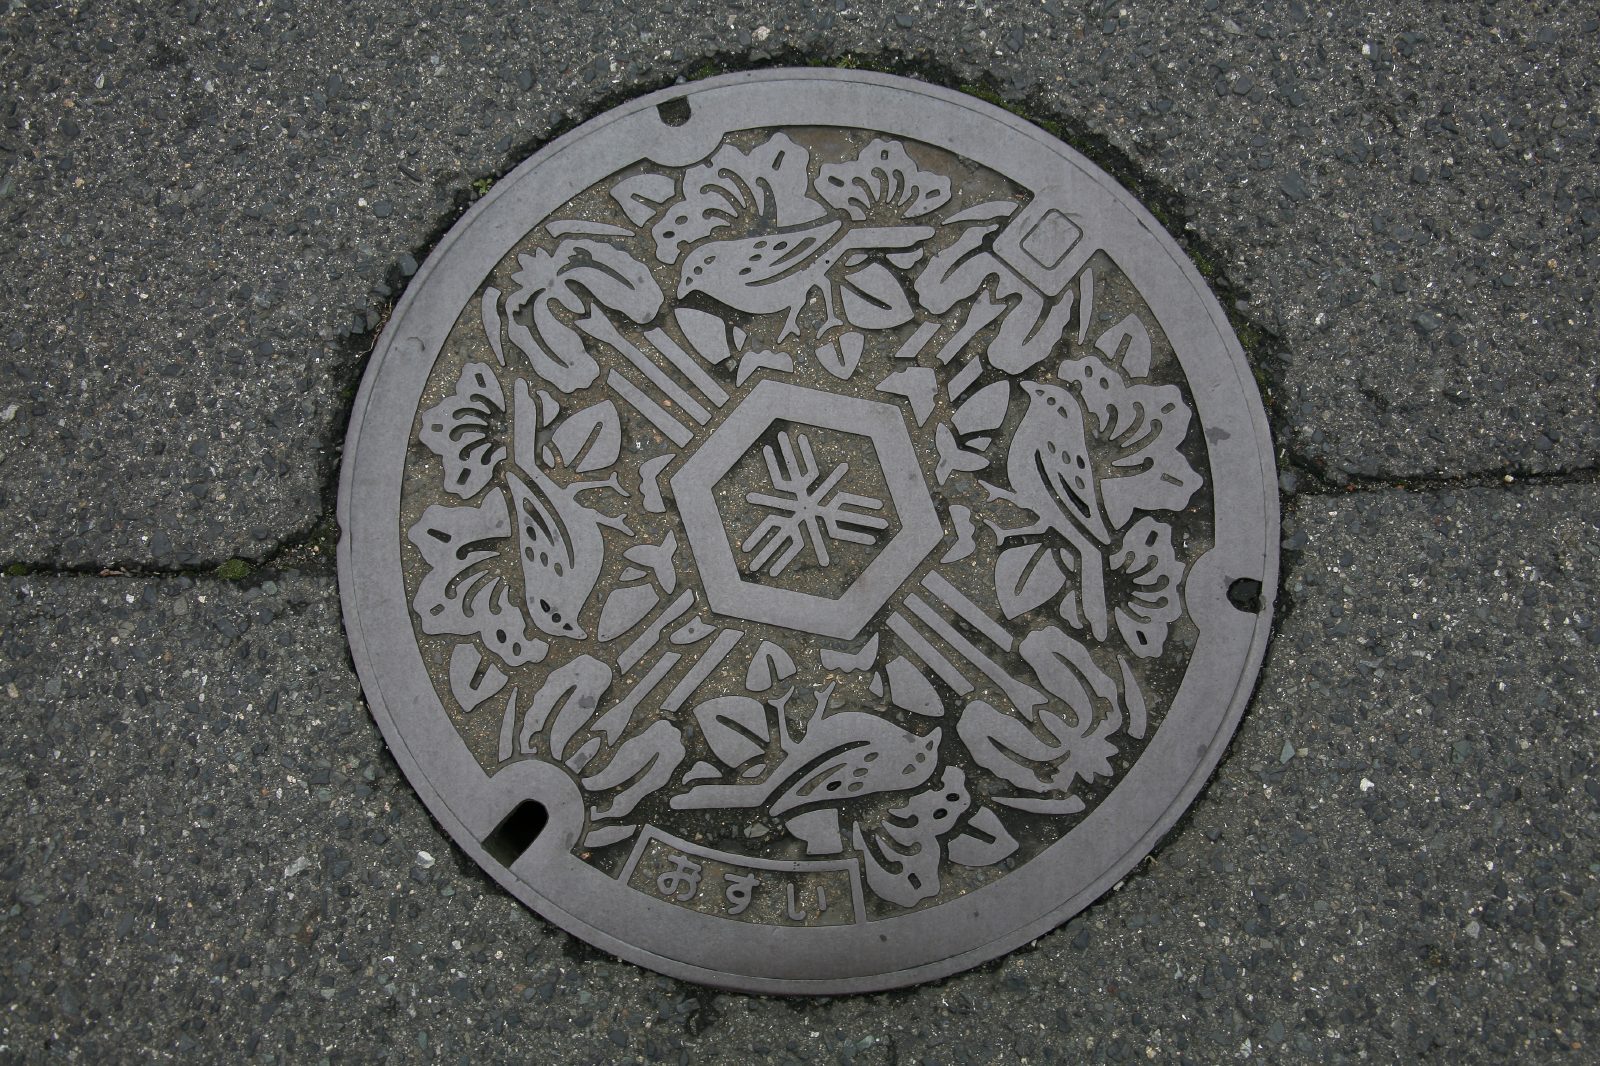 The world of Japan's Artistic Manhole Covers | JAPAN WEB MAGAZINE